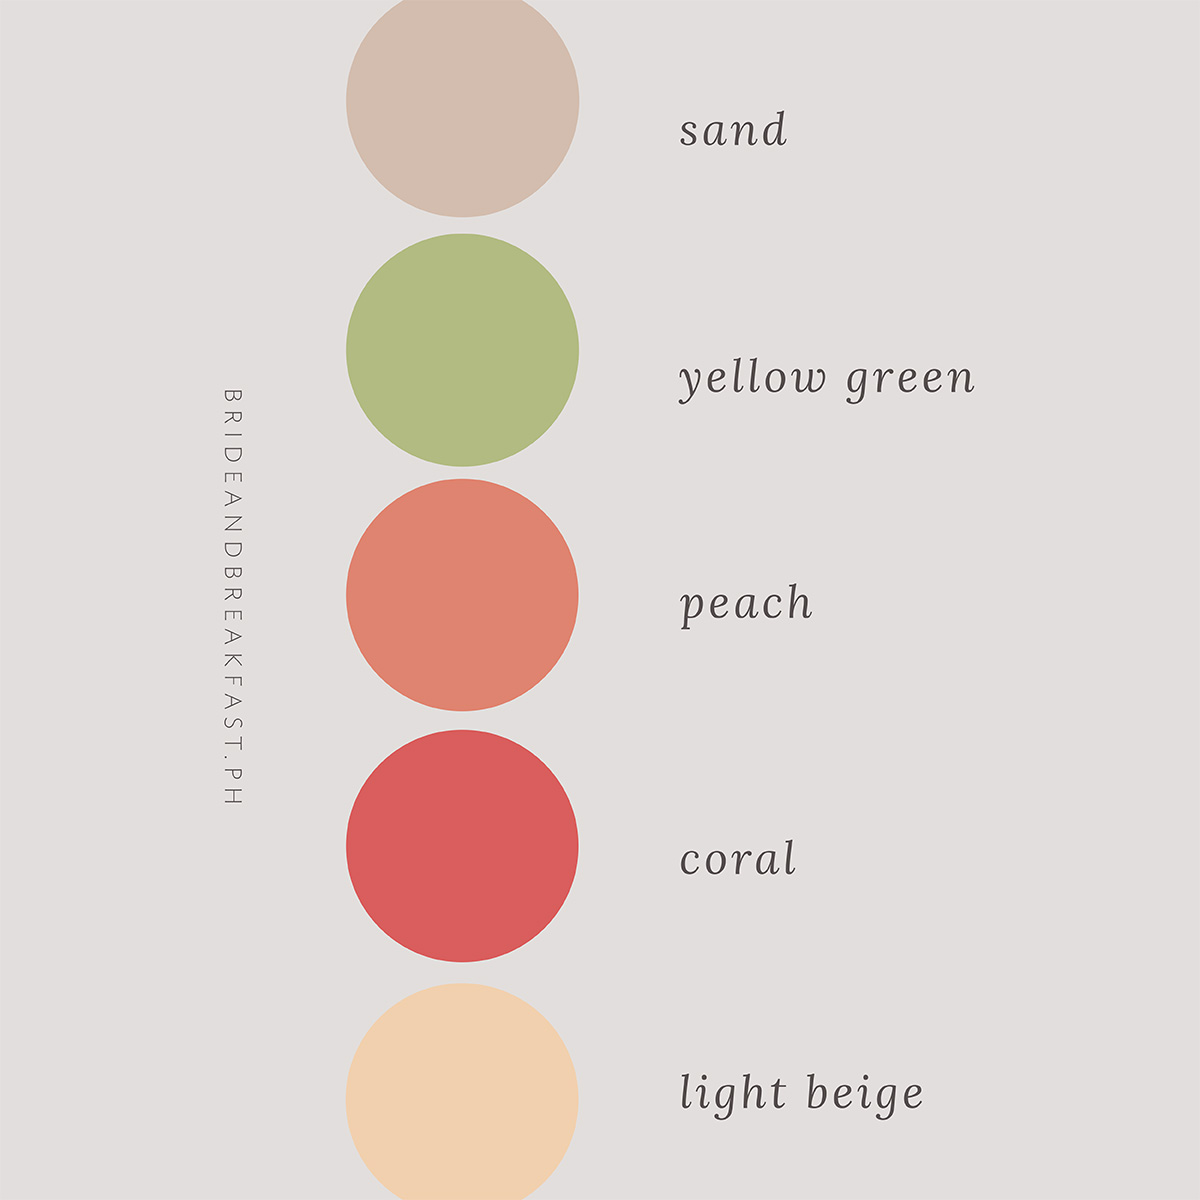 Sand, yellow green, peach, coral, light beige